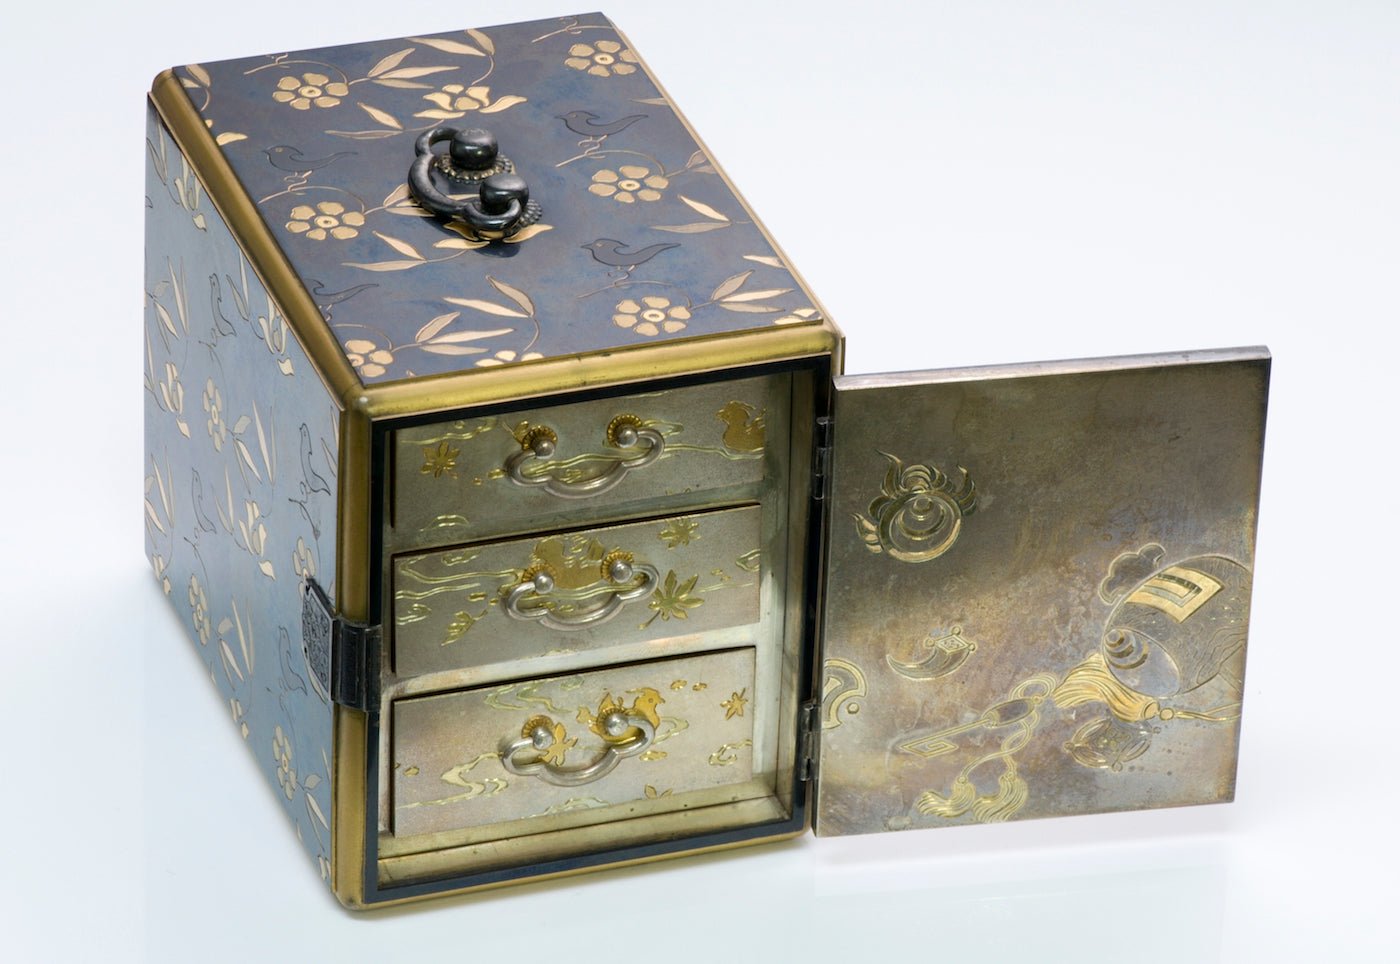 Antique Japanese Jewelry Box